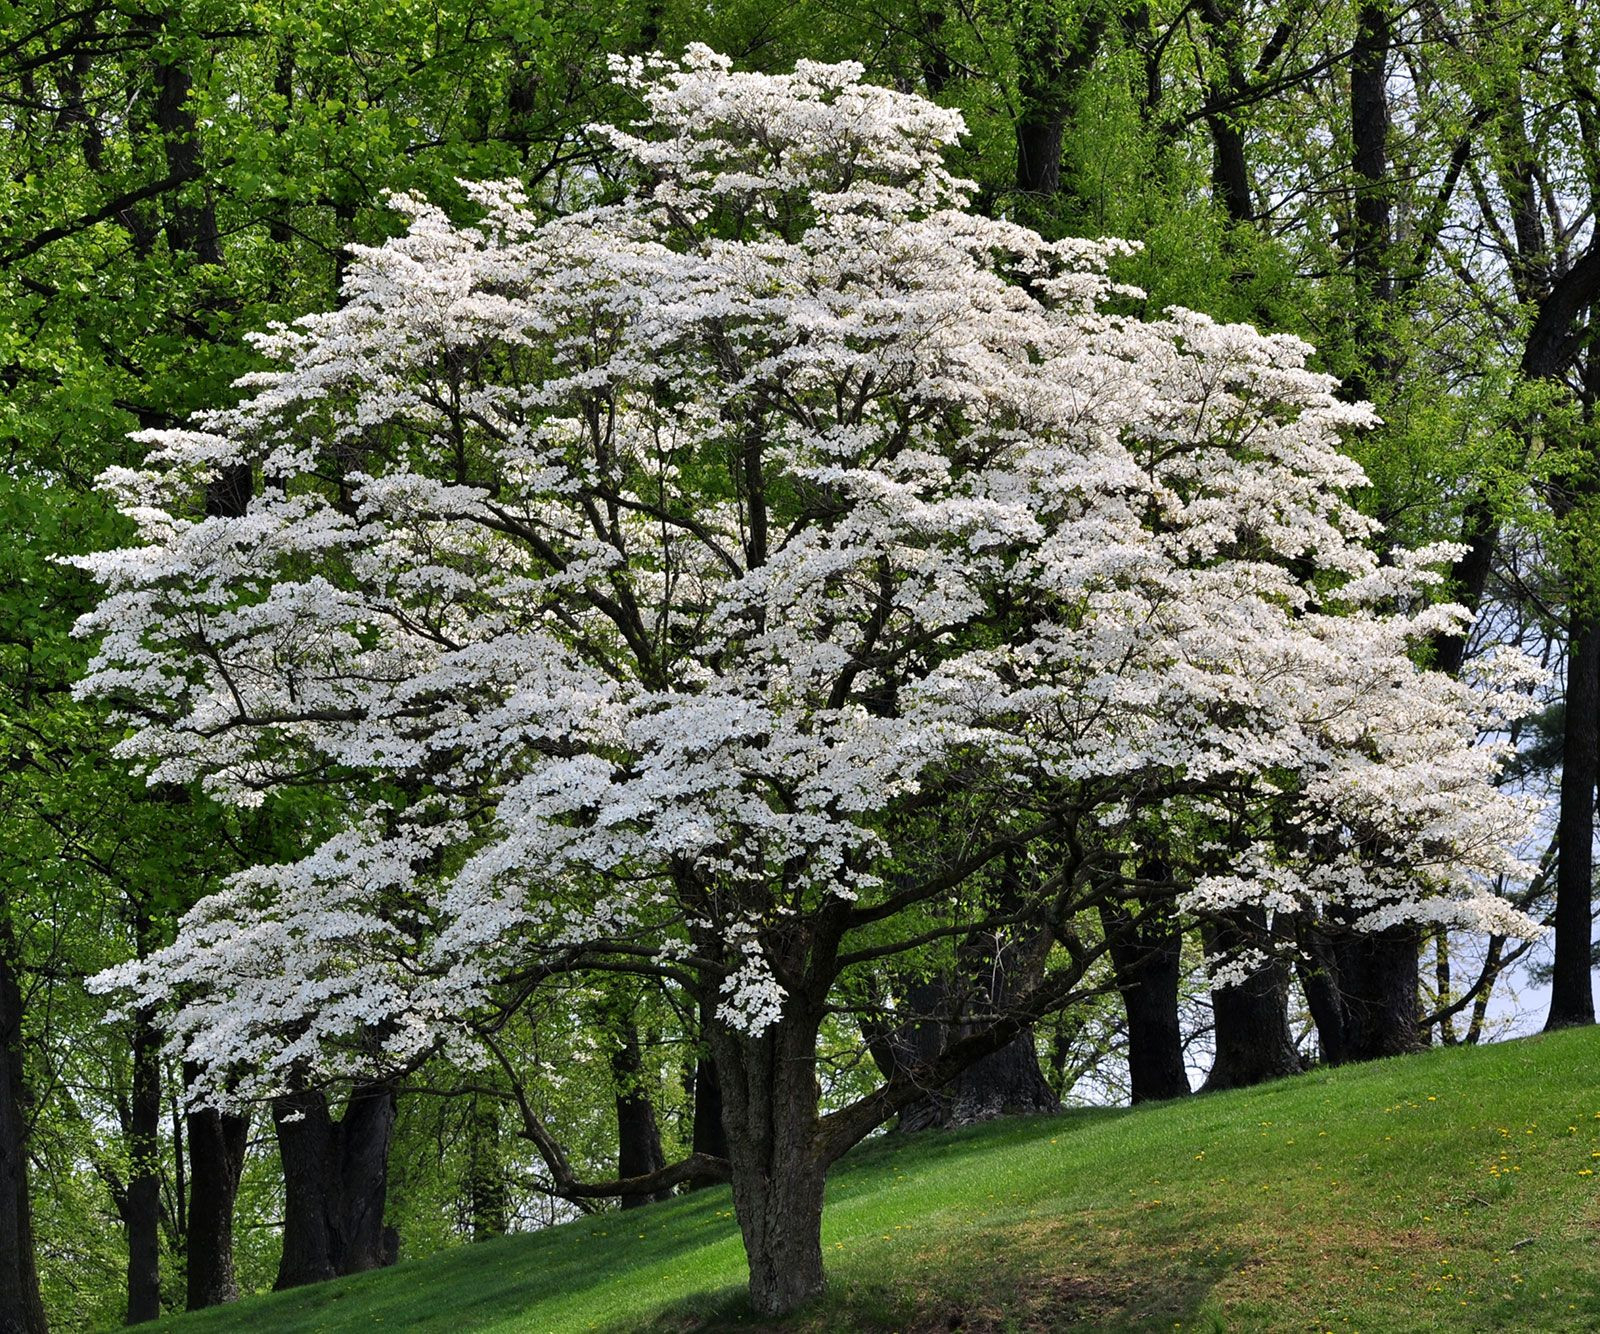 Dogwood | Description, Tree, Flowers, Major Species, &amp; Facts